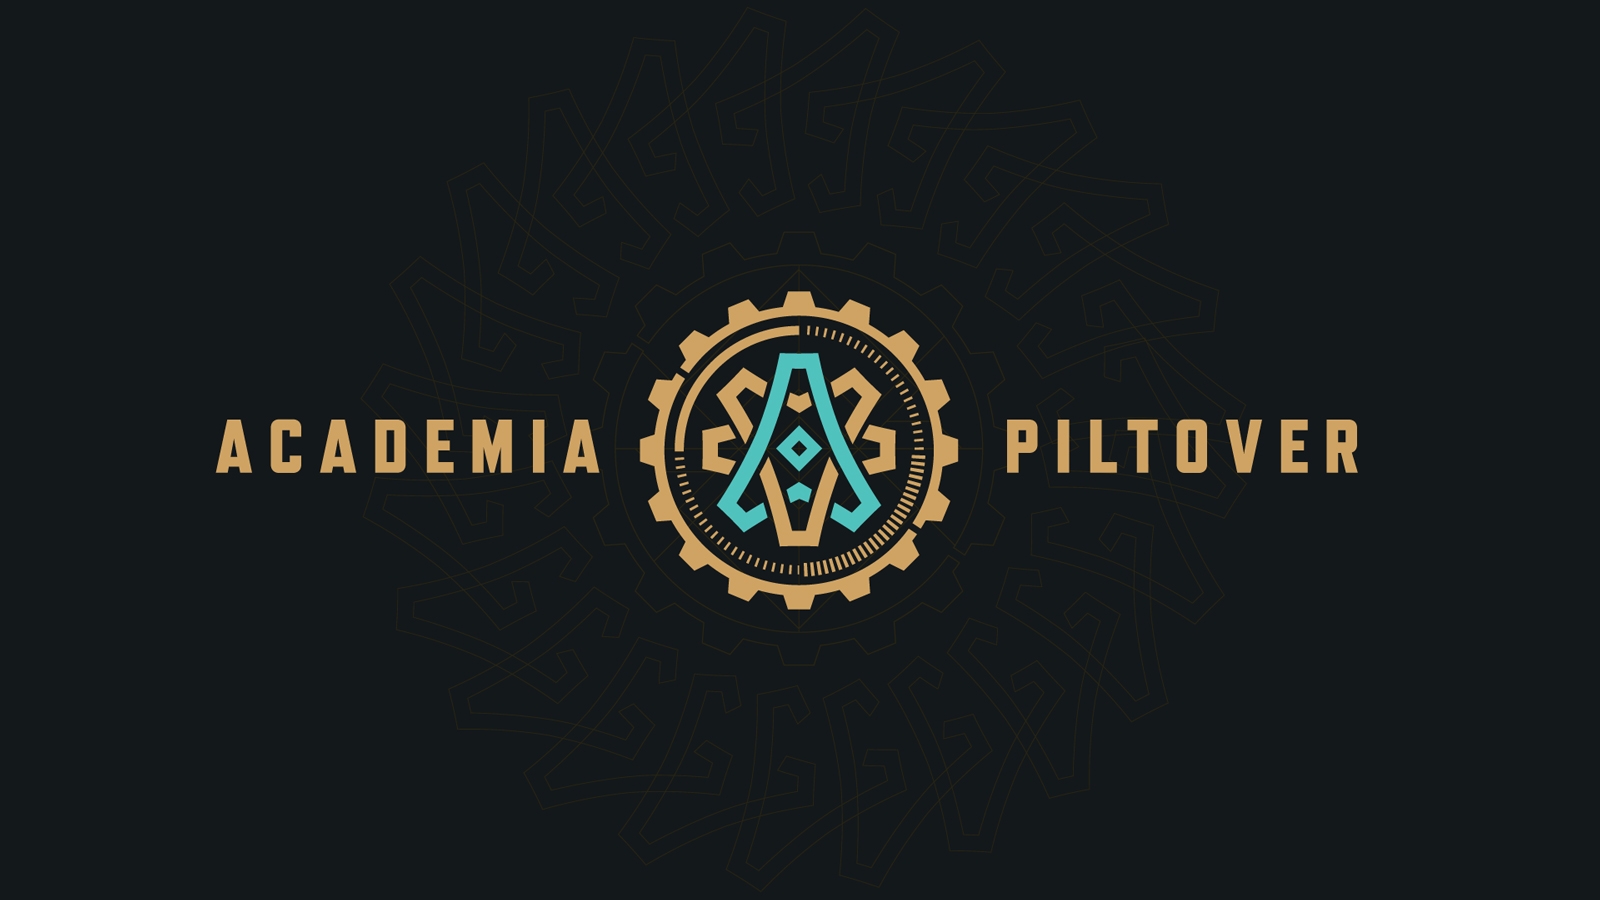 Academia de Piltover - League of Legends